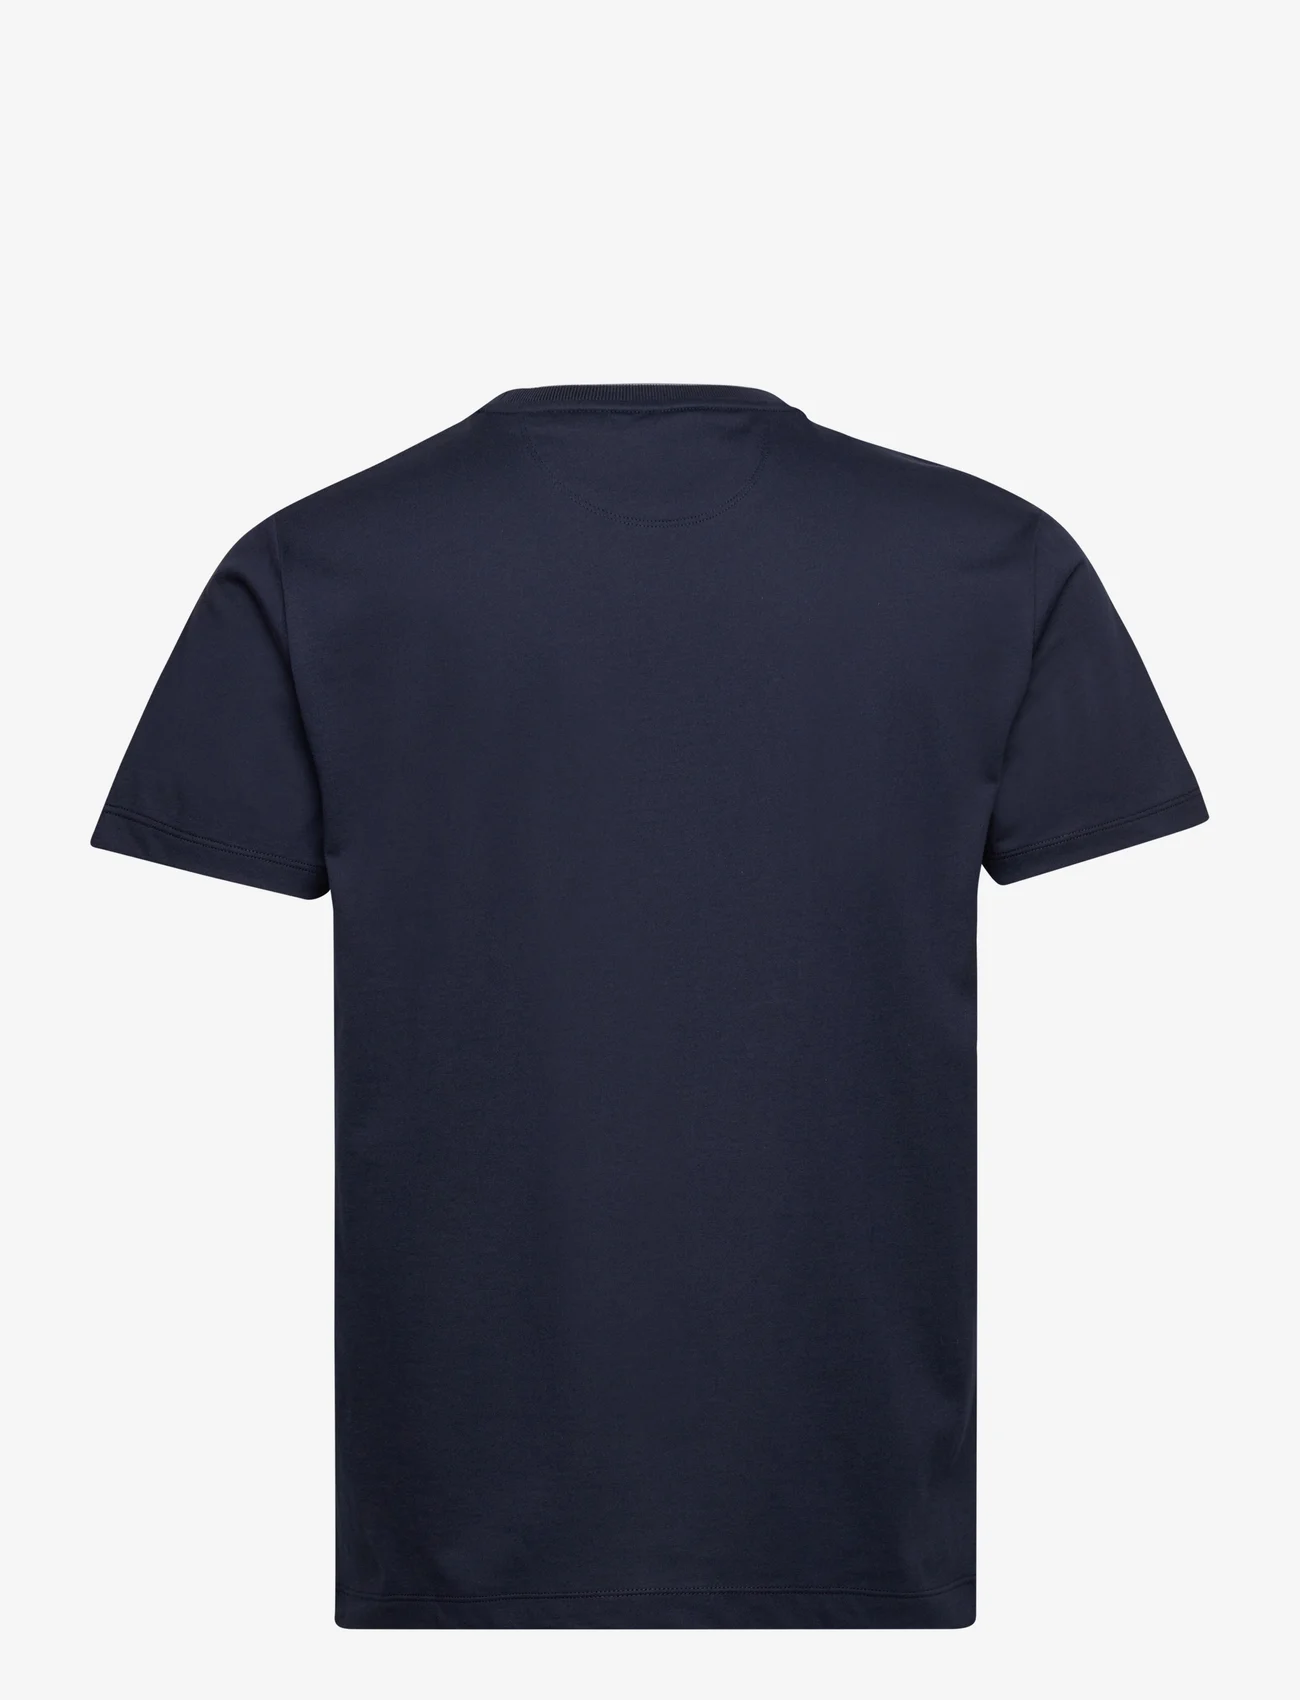 Hackett London - HERITAGE LOGO TEE - marškinėliai trumpomis rankovėmis - navy - 1